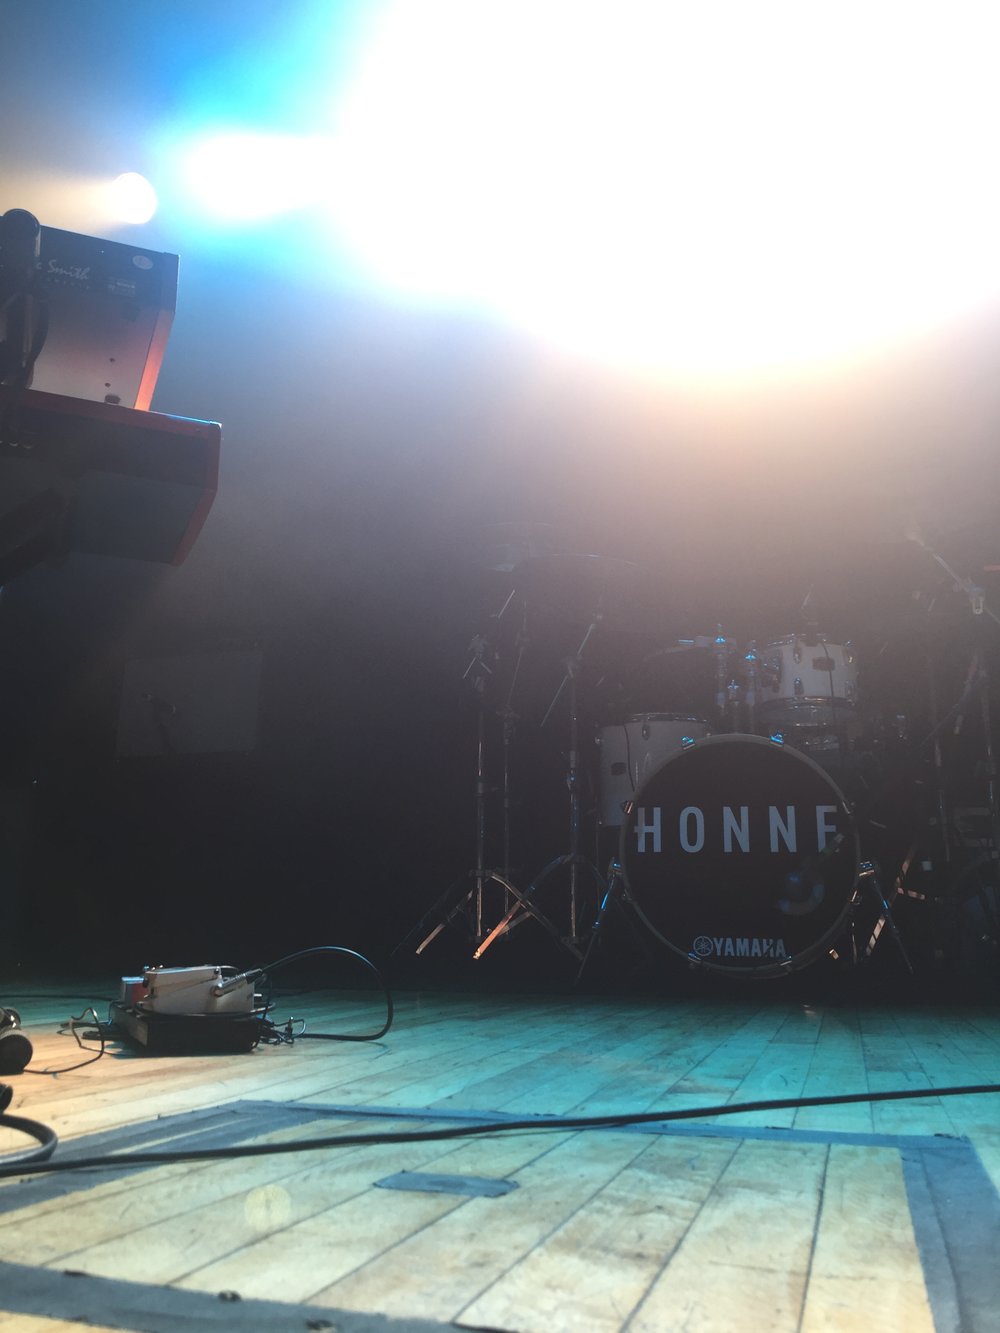   HONNE performing 10.05.2016 @ Warsaw in Brooklyn, NY.  